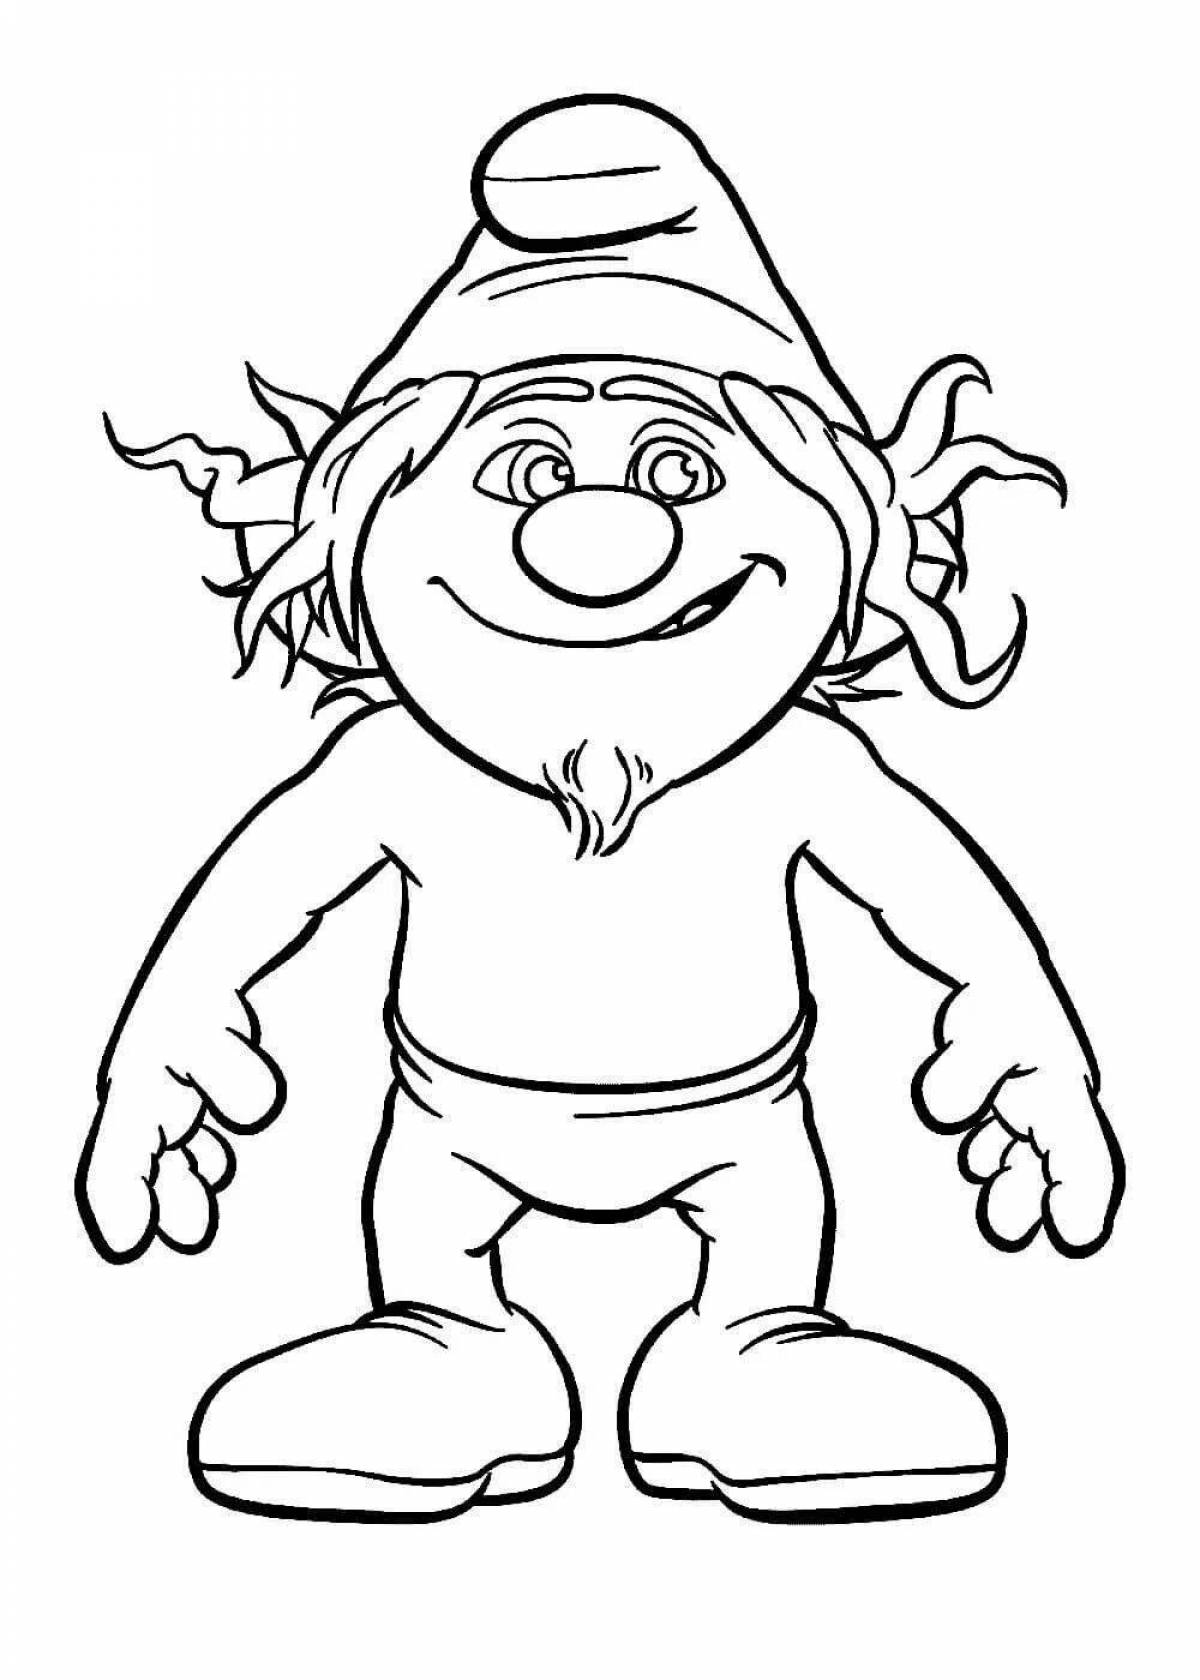 Color-frenzy gnome coloring page для детей 3-4 лет